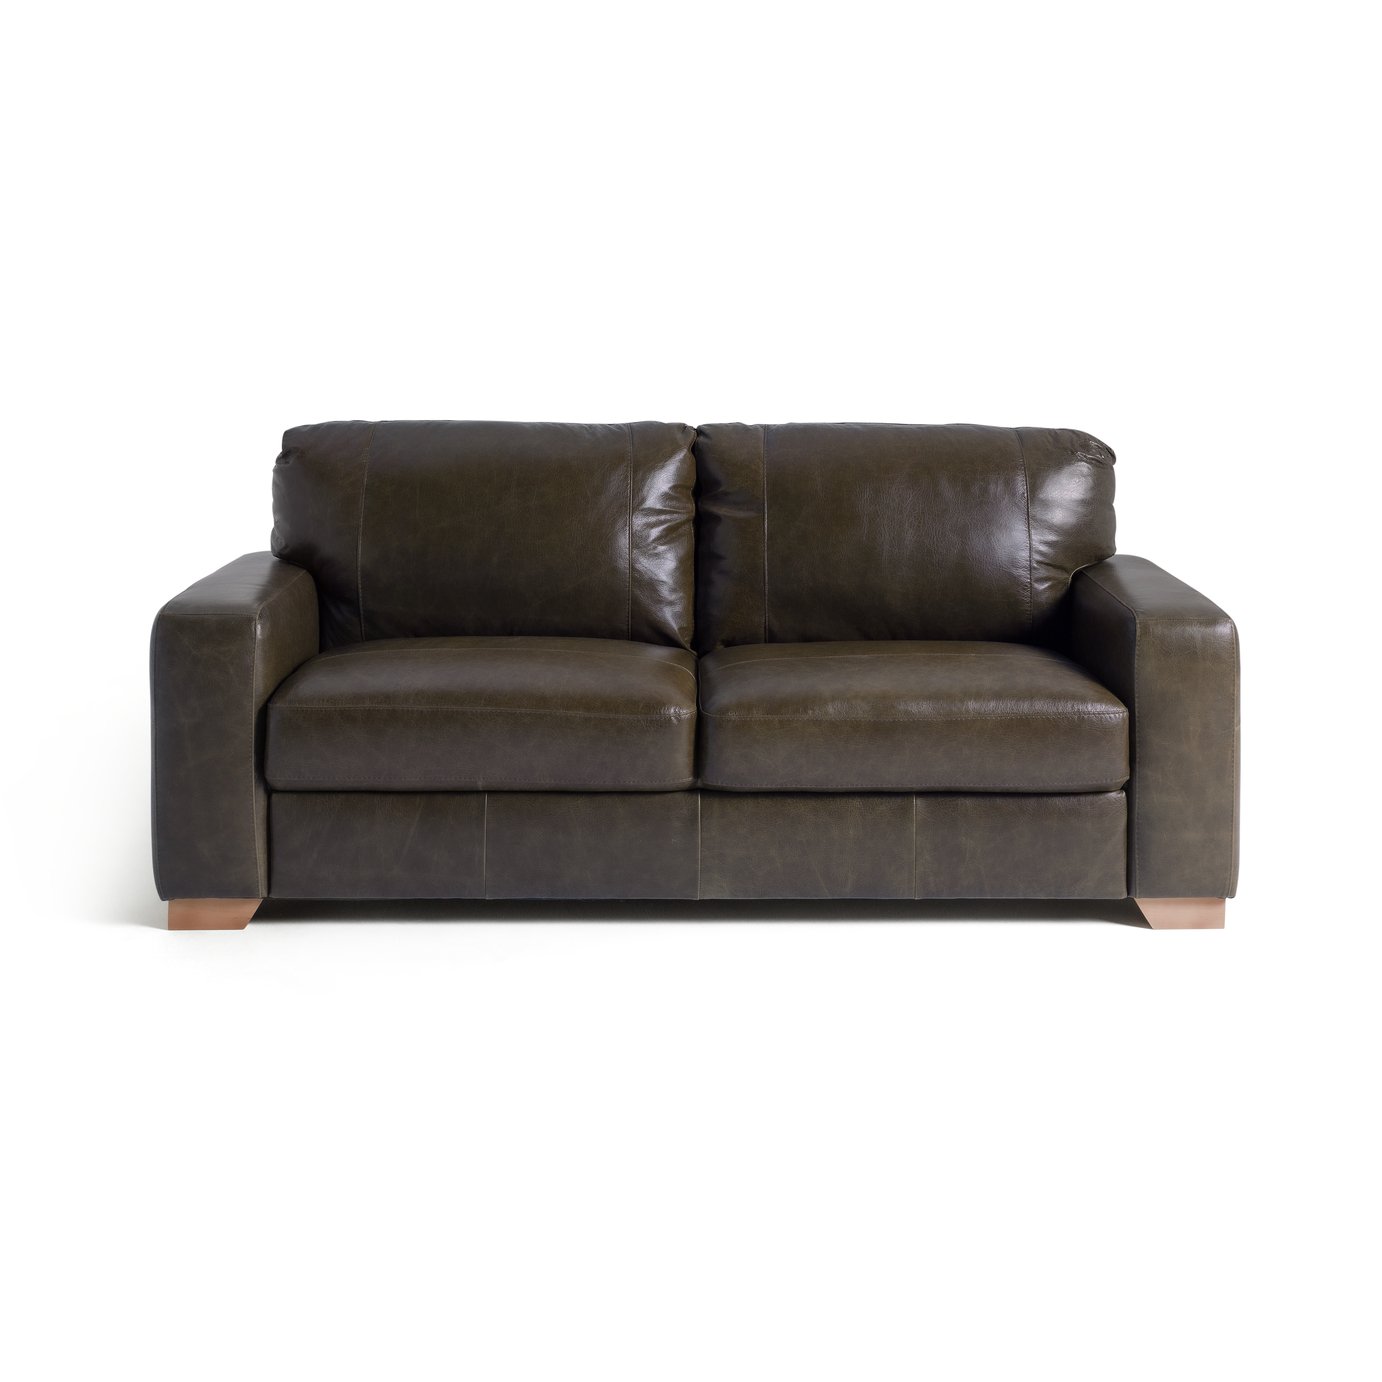 Habitat Eton 3 Seater Leather Sofa - Dark Brown